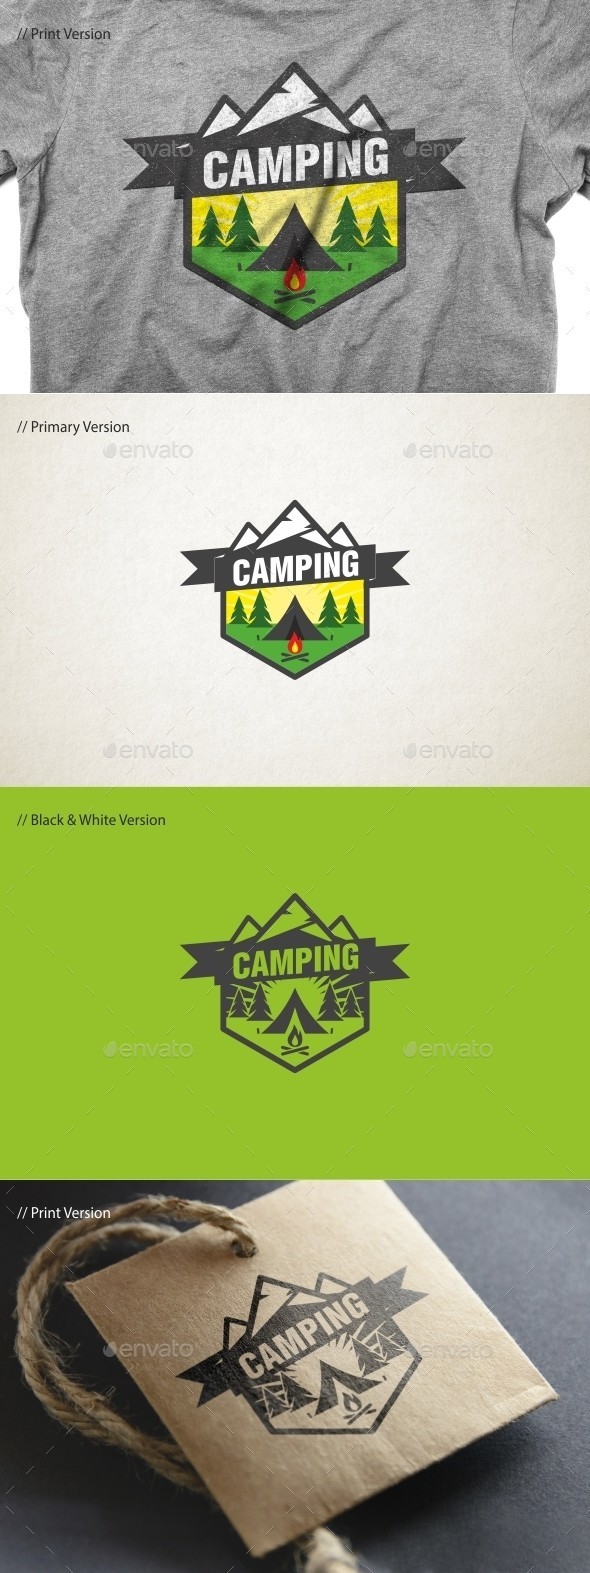 Camping 20logo 20template 20590